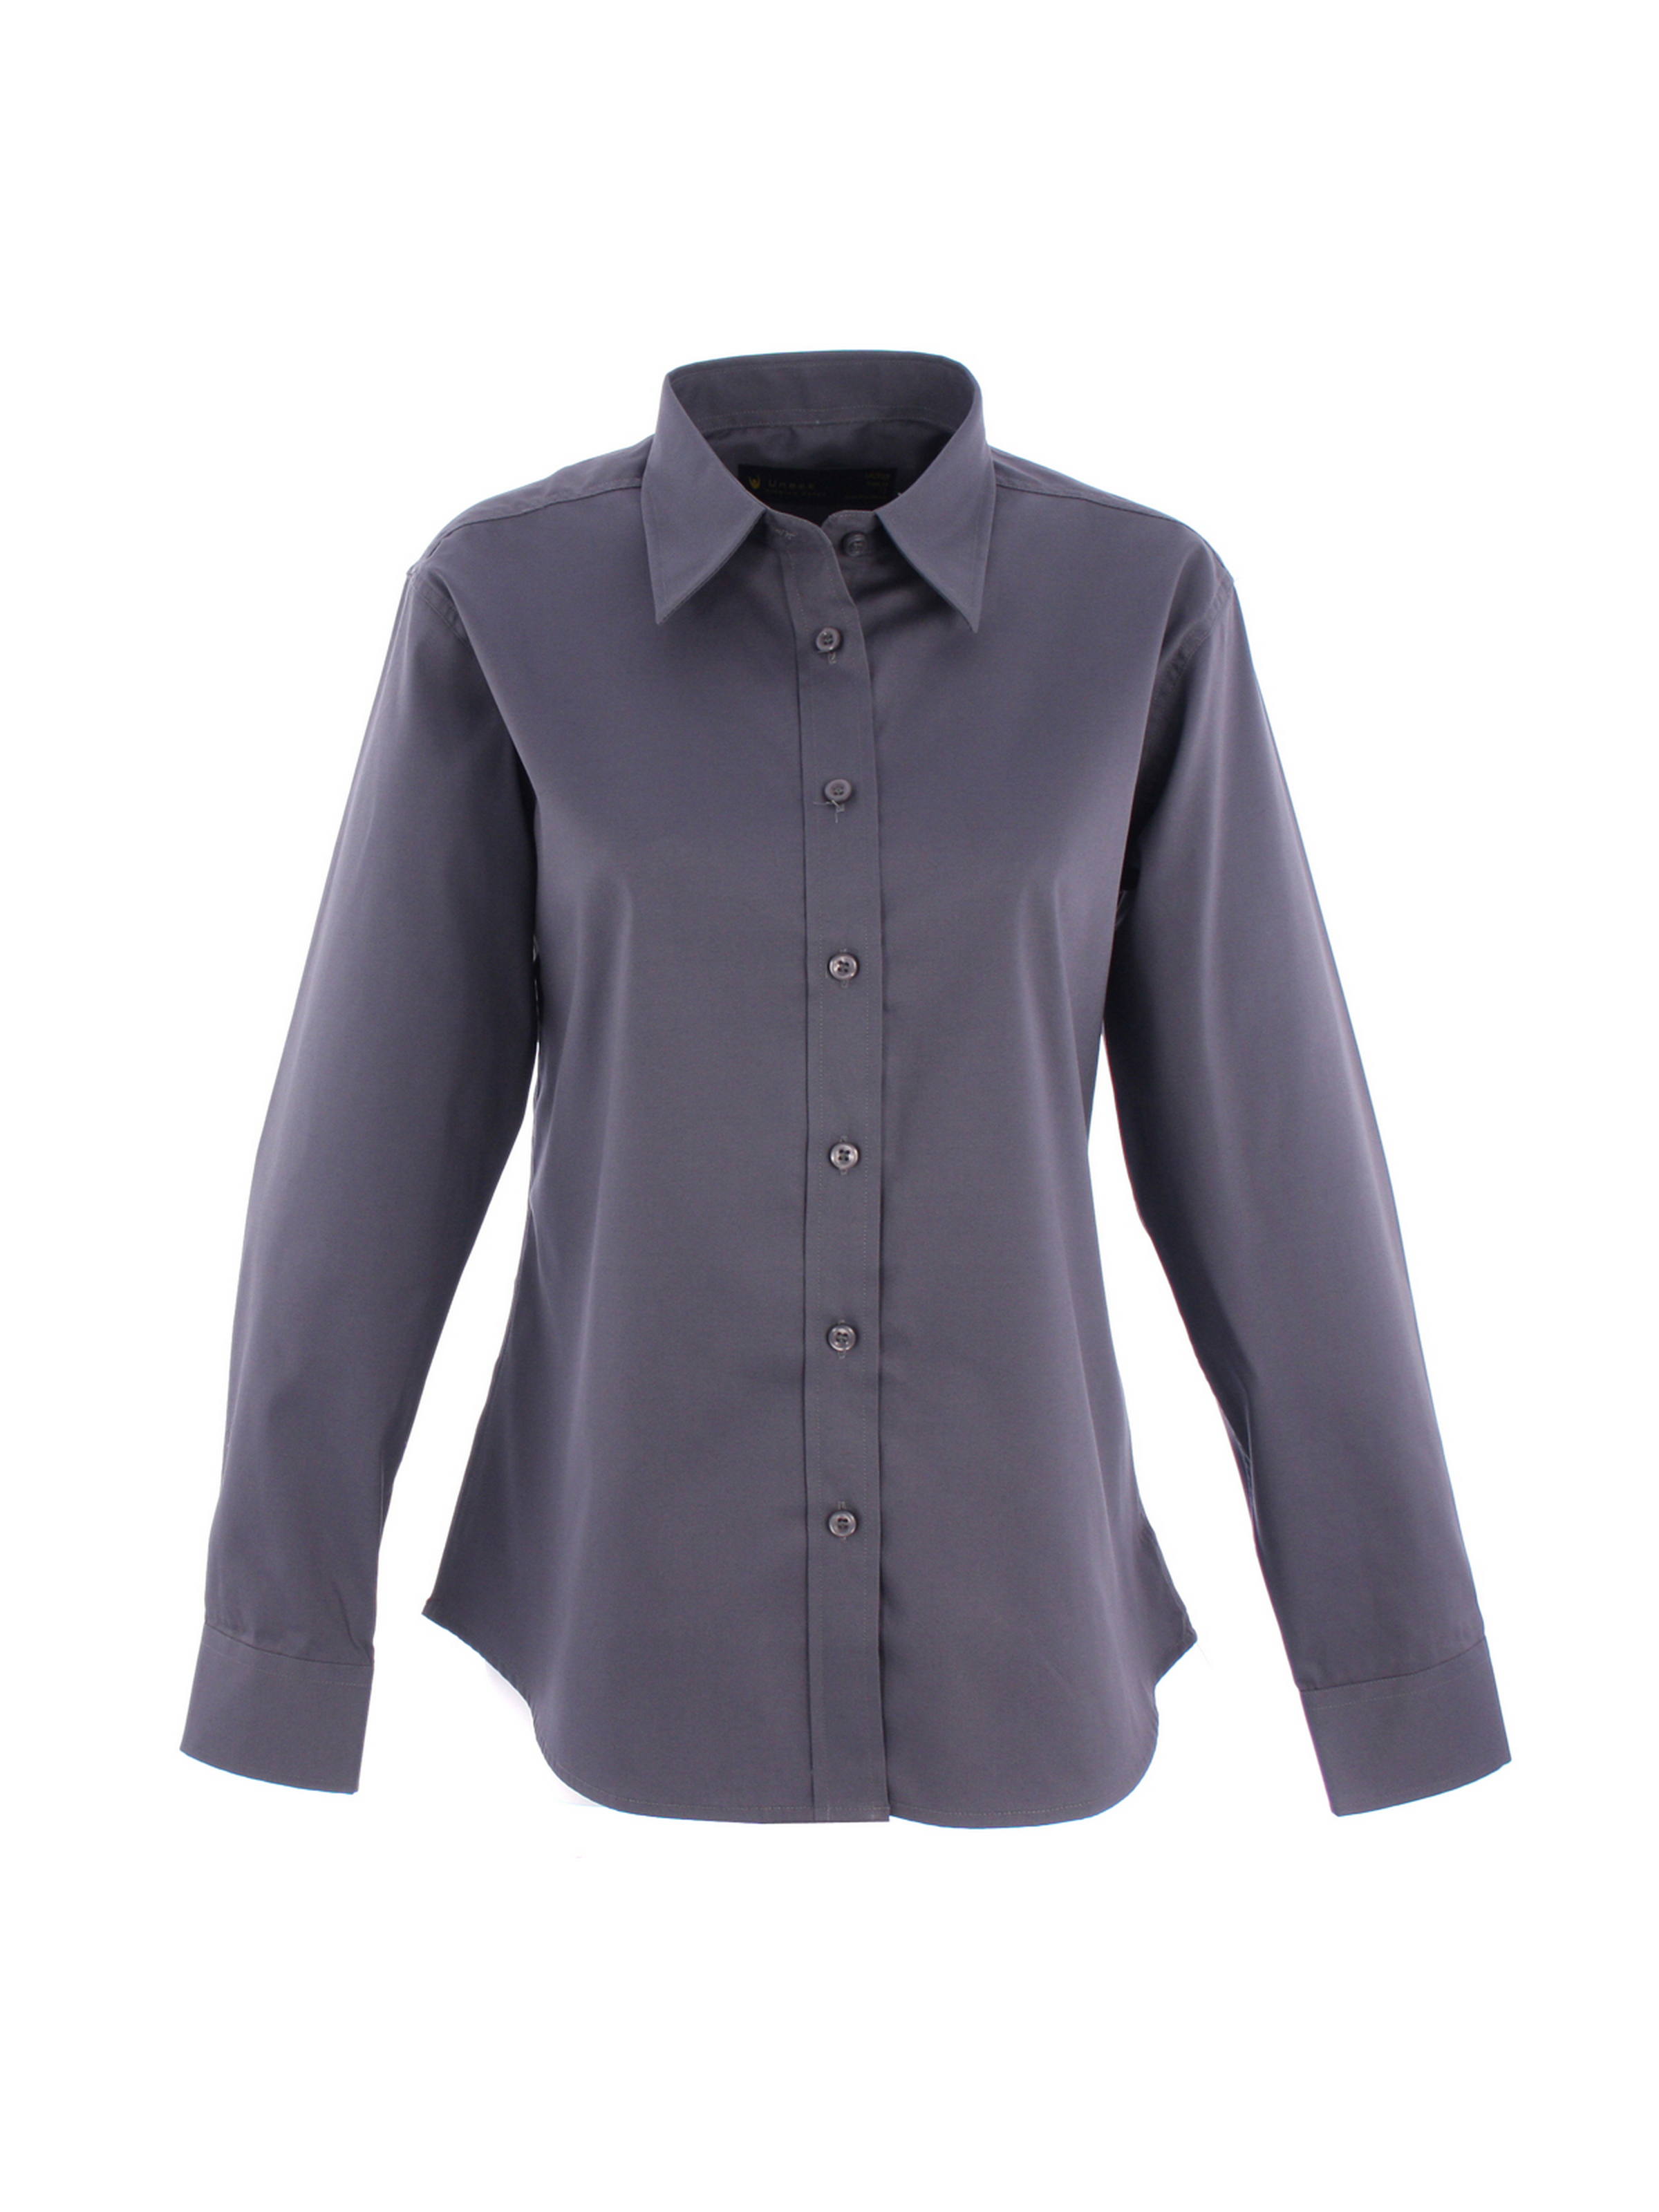 UC703 Ladies Pinpoint Oxford Full Sleeve Shirt - Enterprise Workwear